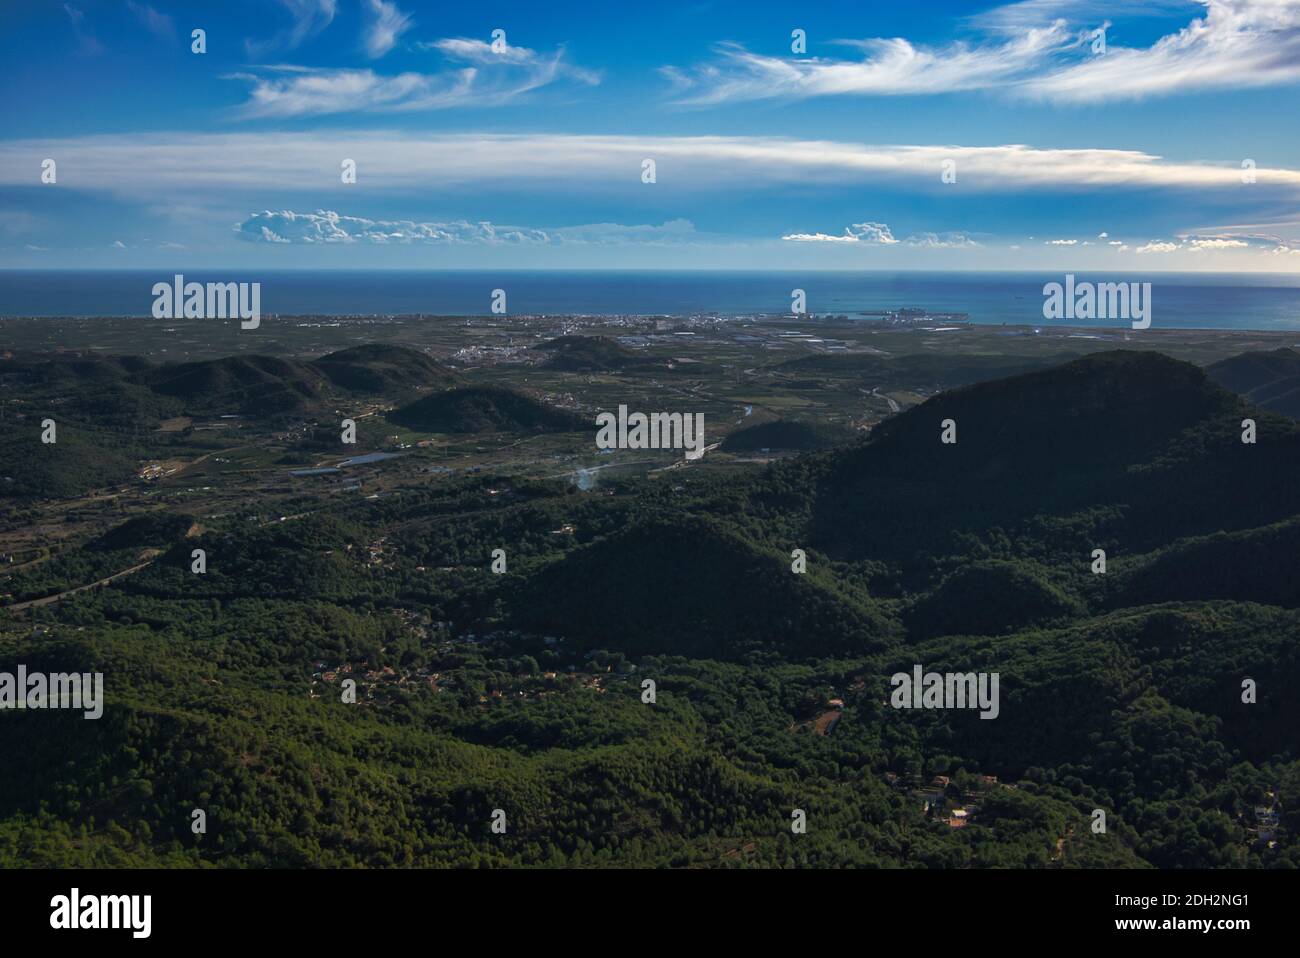 The Garbi viewpoint in the Sierra Calderona of Valencia, Spain Stock Photo